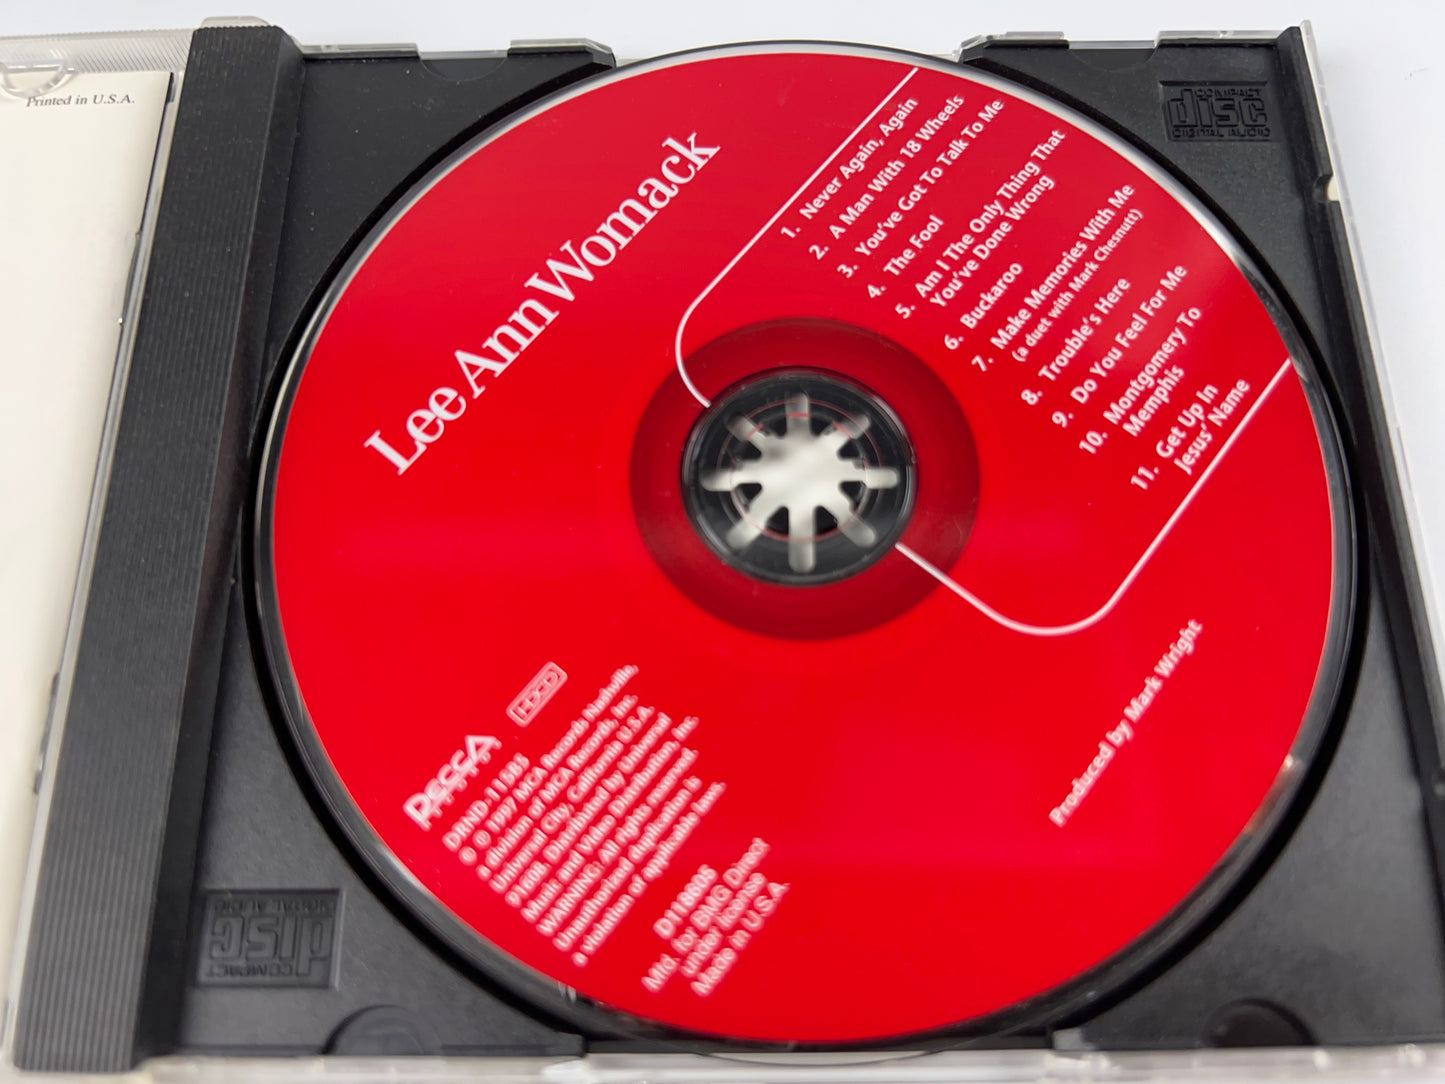 Lee Ann Womack - Audio CD By Lee Ann Womack